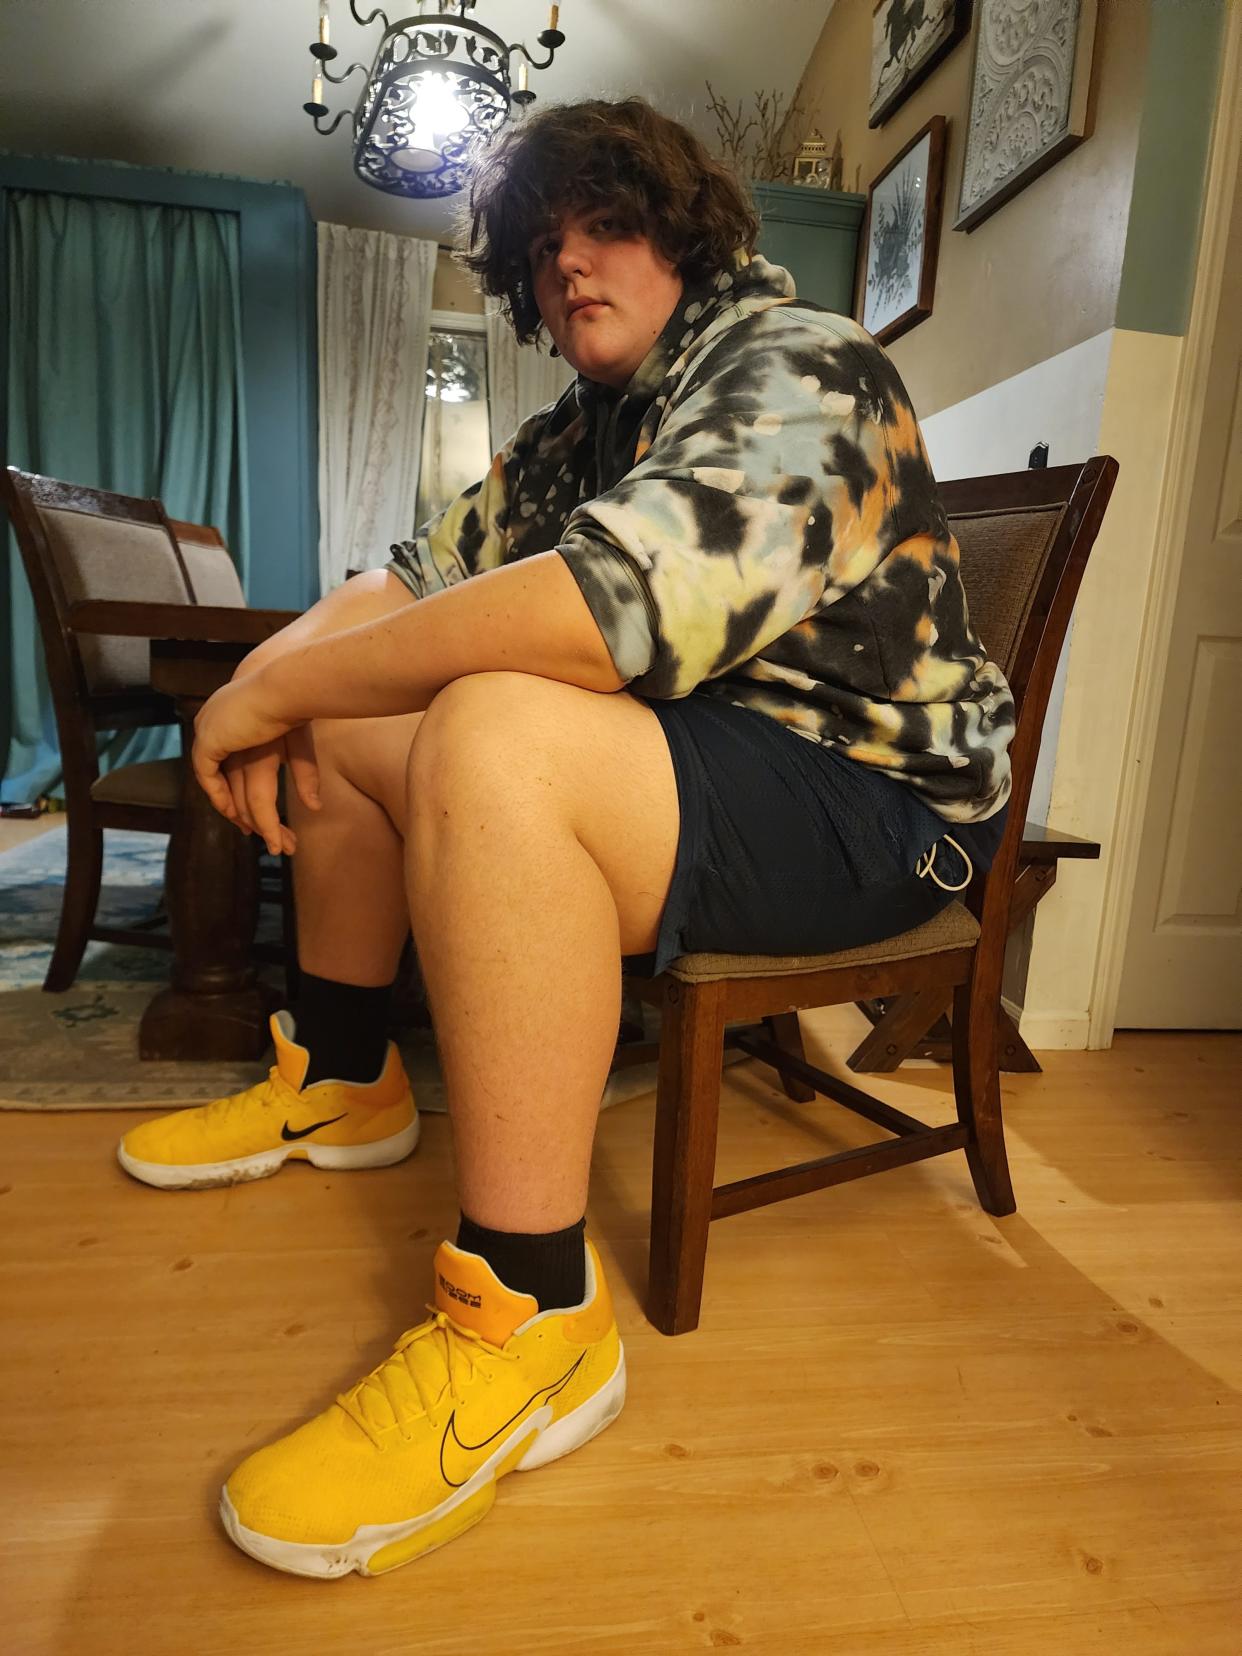 Eric Kilburn, 14, in his size 22 Nike shoes. The 6'10